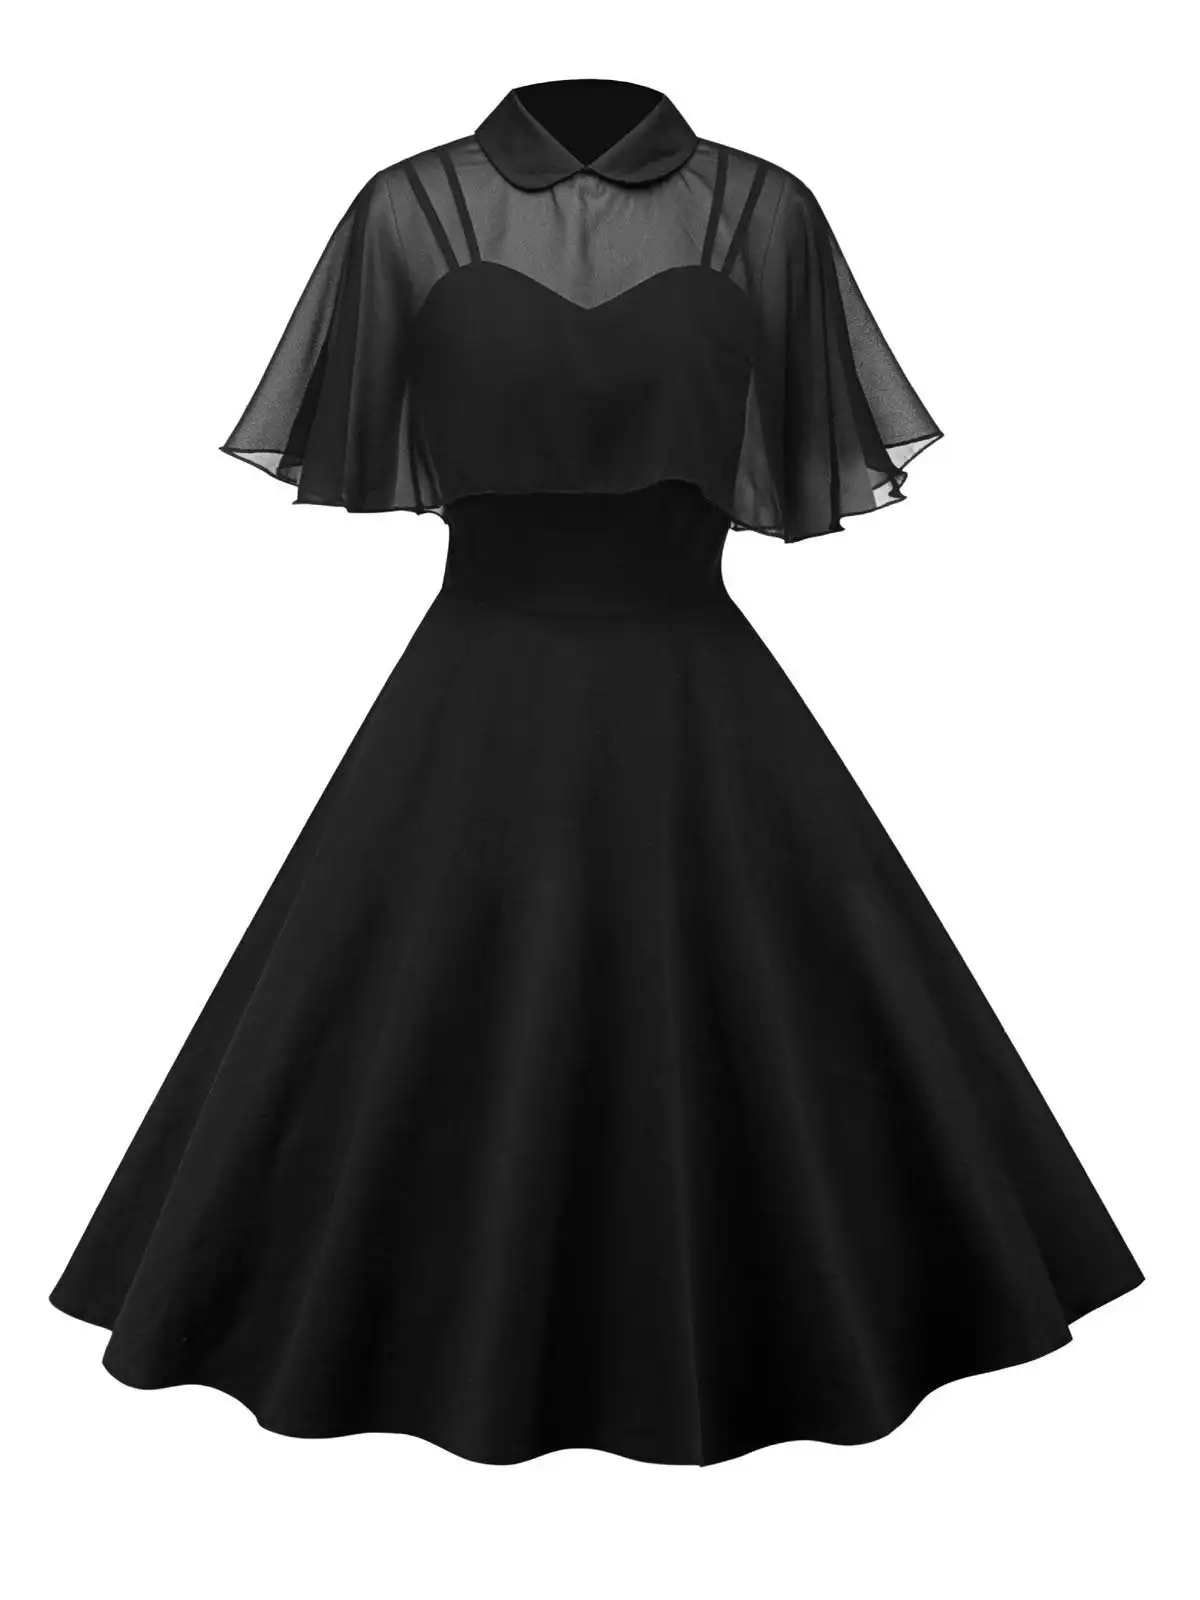 

Women's Vintage Casual Plus Size Cape Spliced Swing Dress Gothic Punk Pleated Organza SleevesFit Flare Women's Dress Black Solid